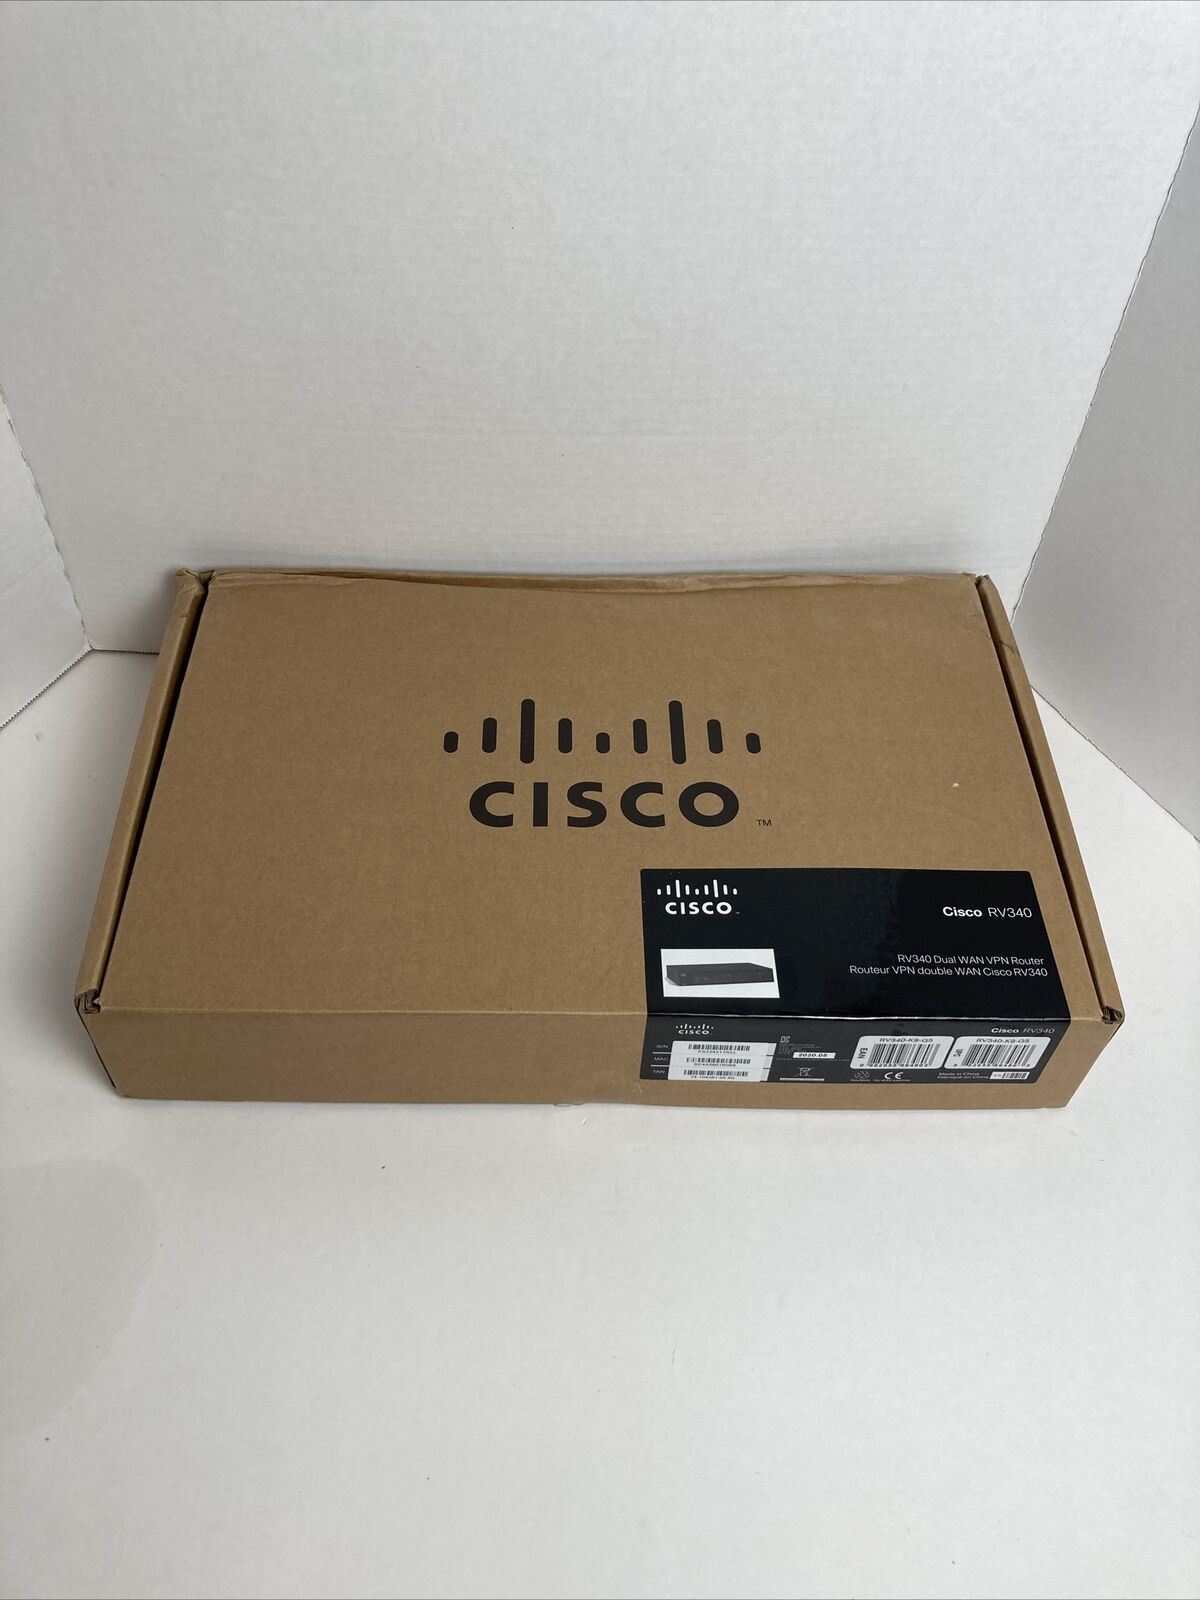 Cisco RV340 Dual WAN Gigabit Router 2 USB 4 LAN ports Flexible VPN functionality